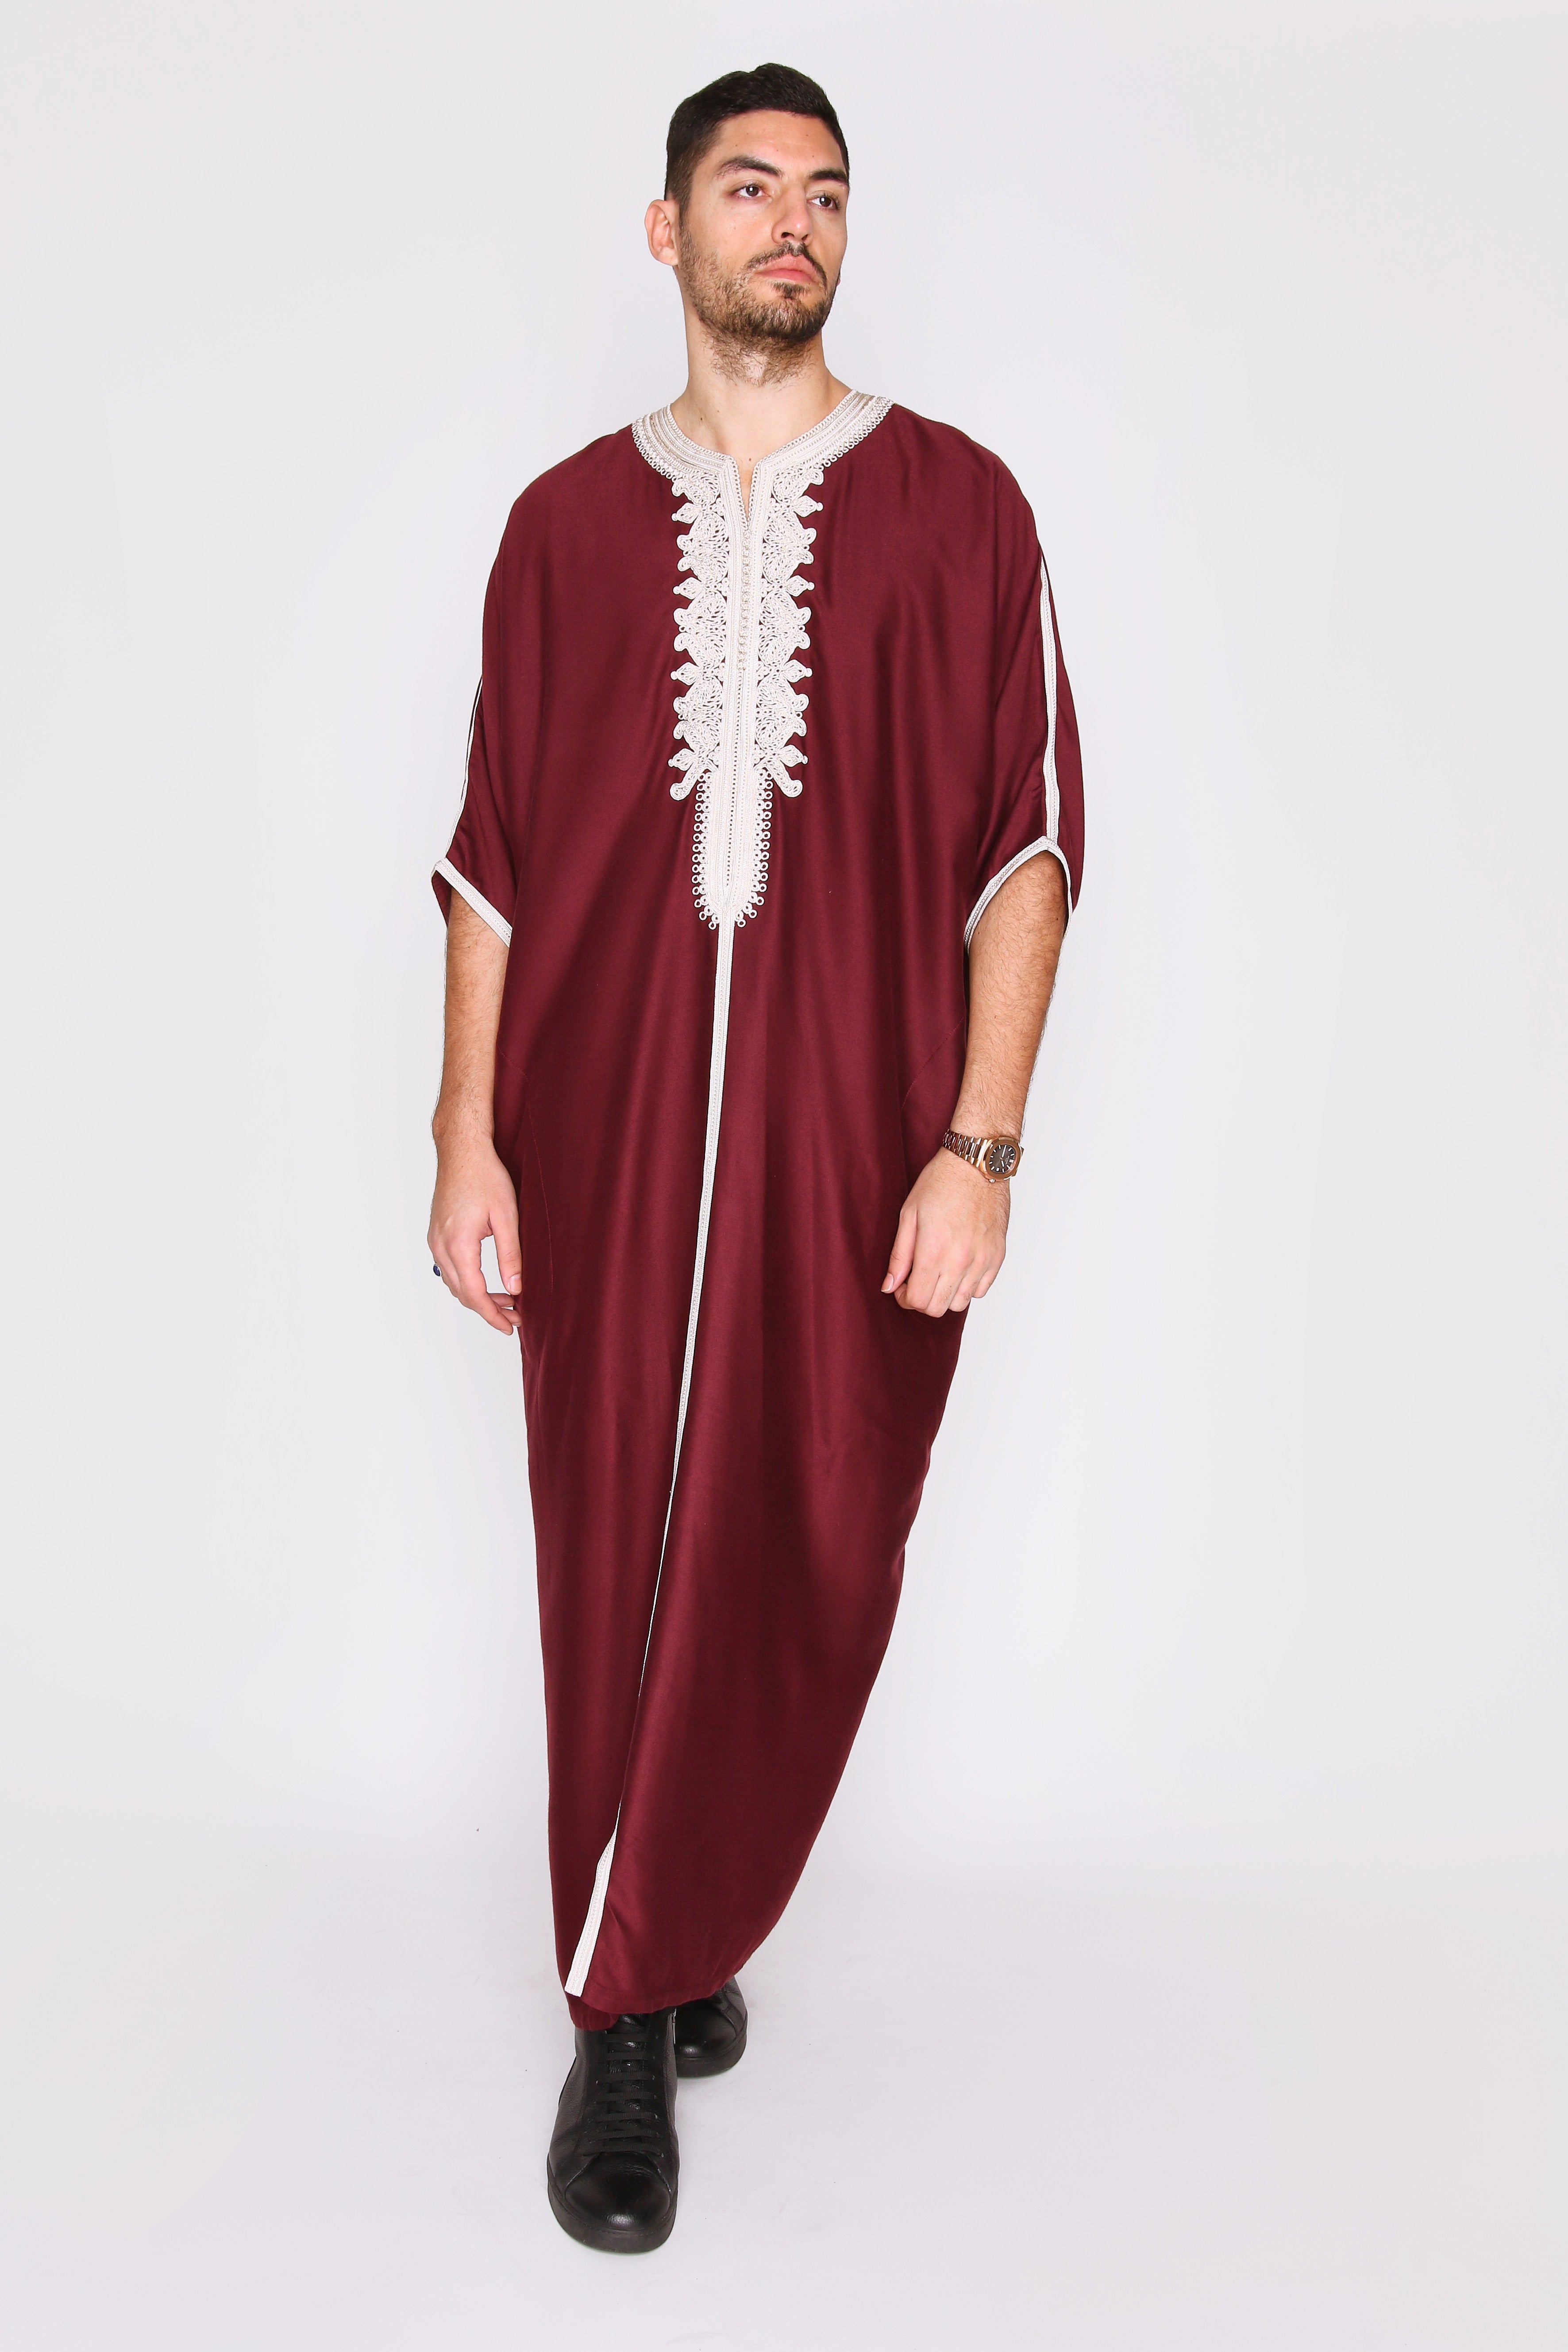 Gandoura Hamza Embroidered Short Sleeve Men's Long Robe Thobe in Burgundy